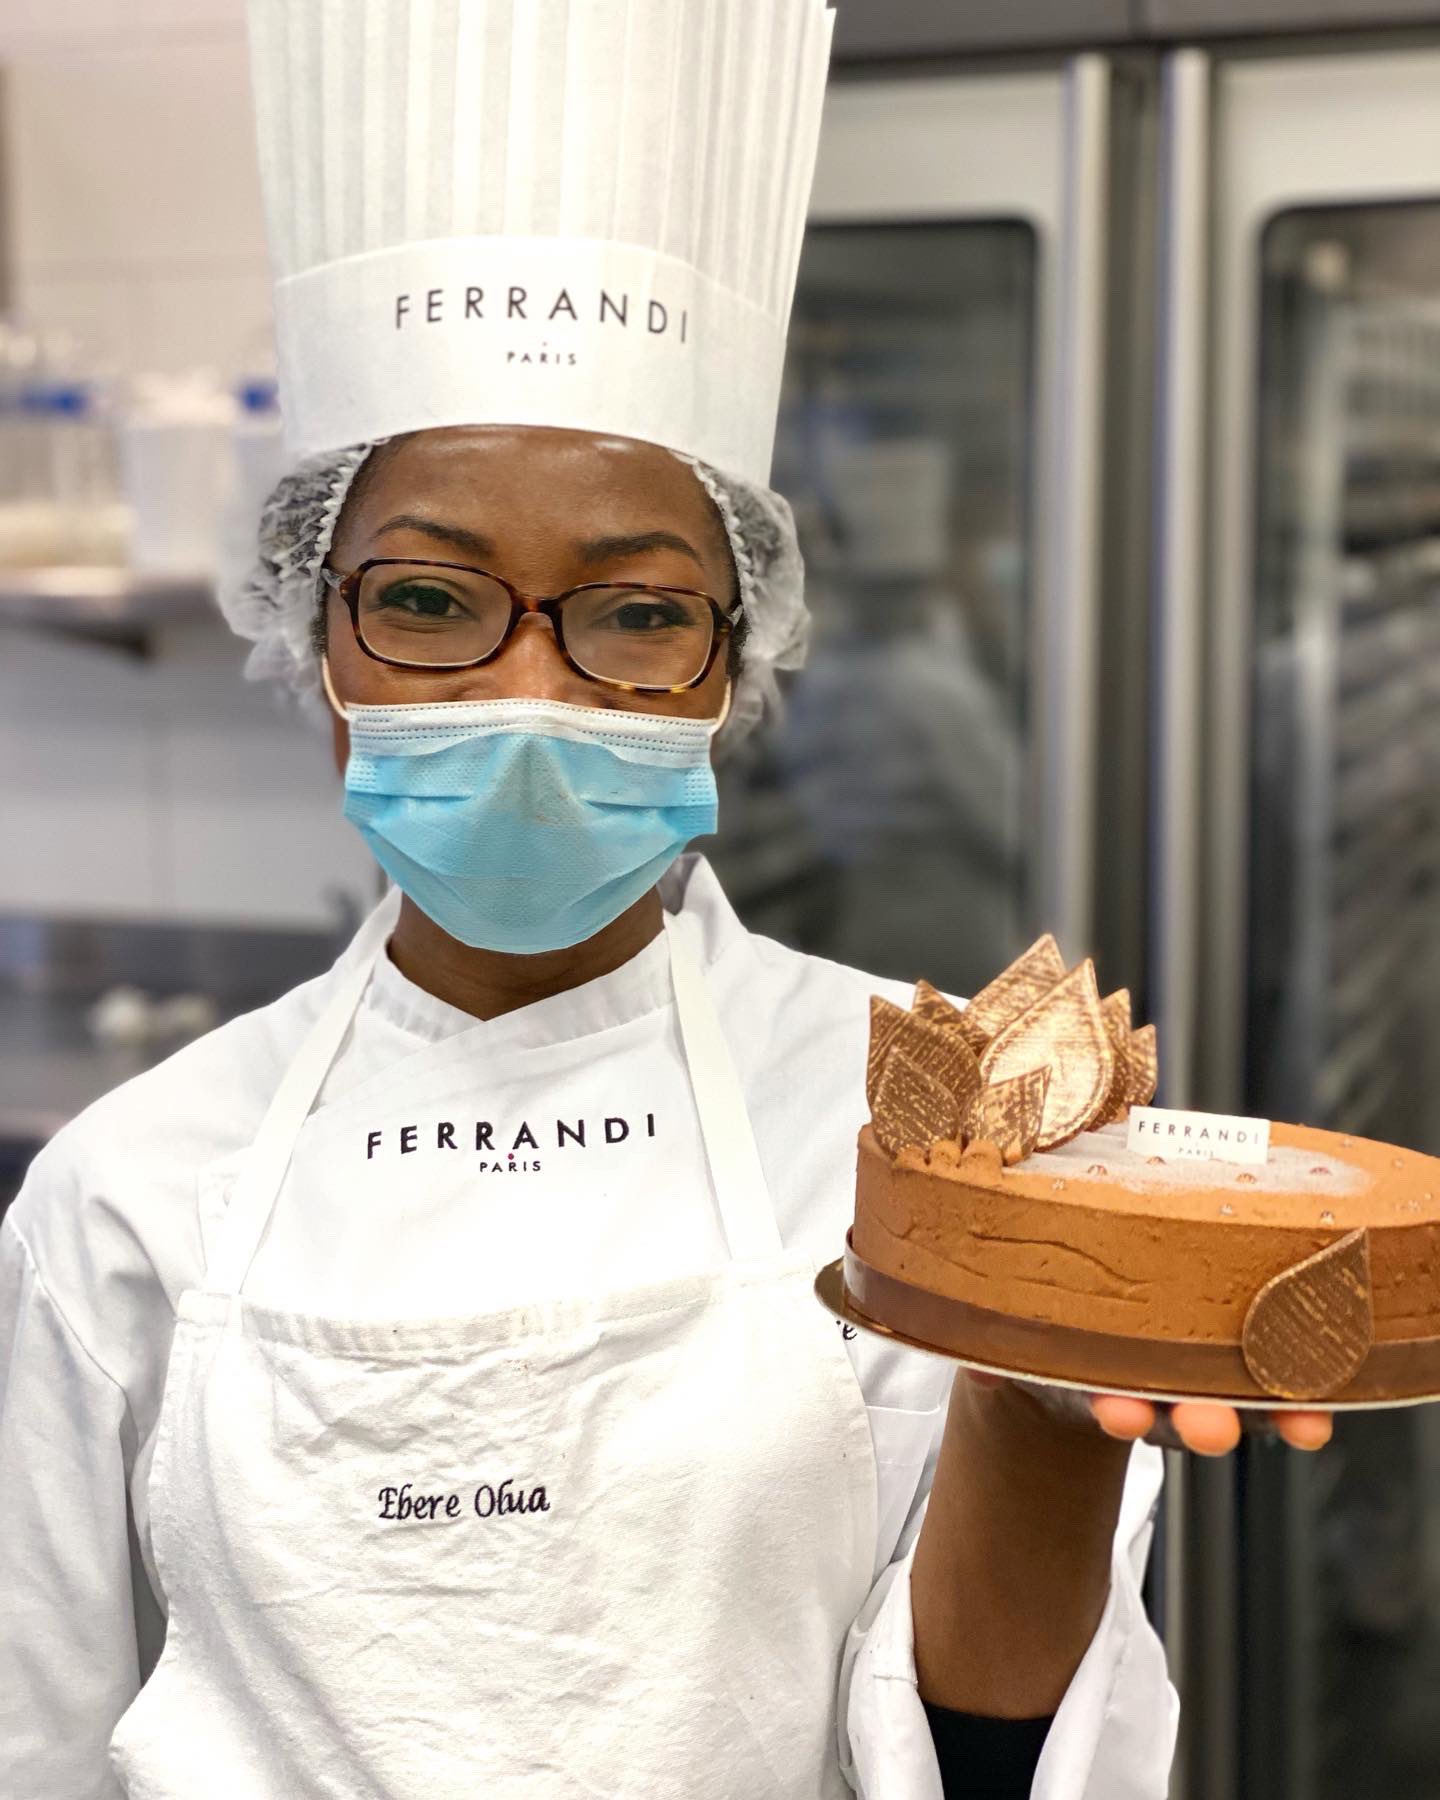 Ferrandi Intensive Pastry Program